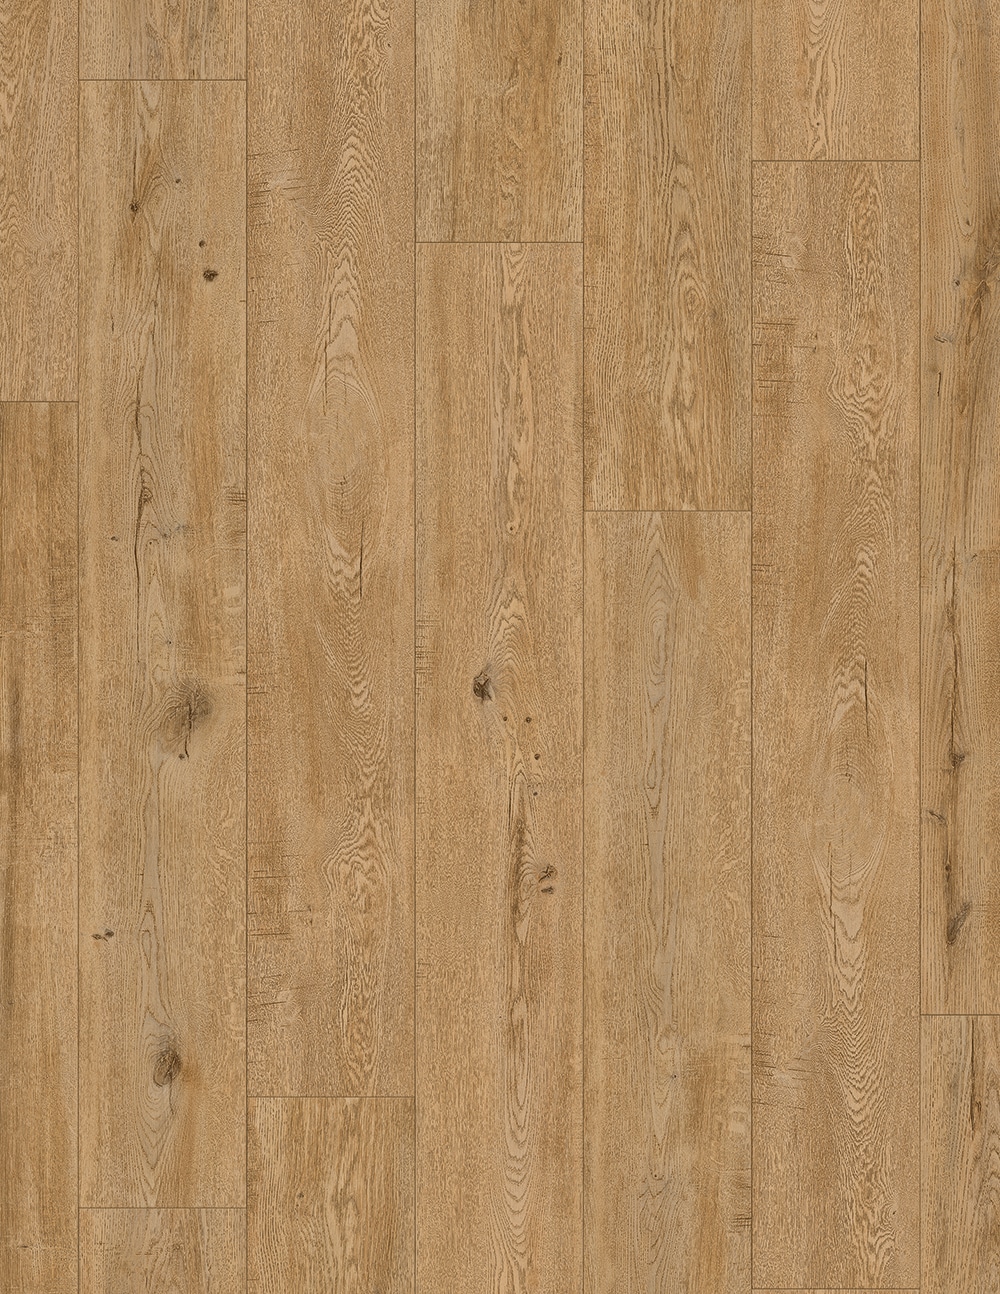 (Sample) Allen+Roth Scarlet Oak Natural Laminate Flooring in Gold | - allen + roth 53513